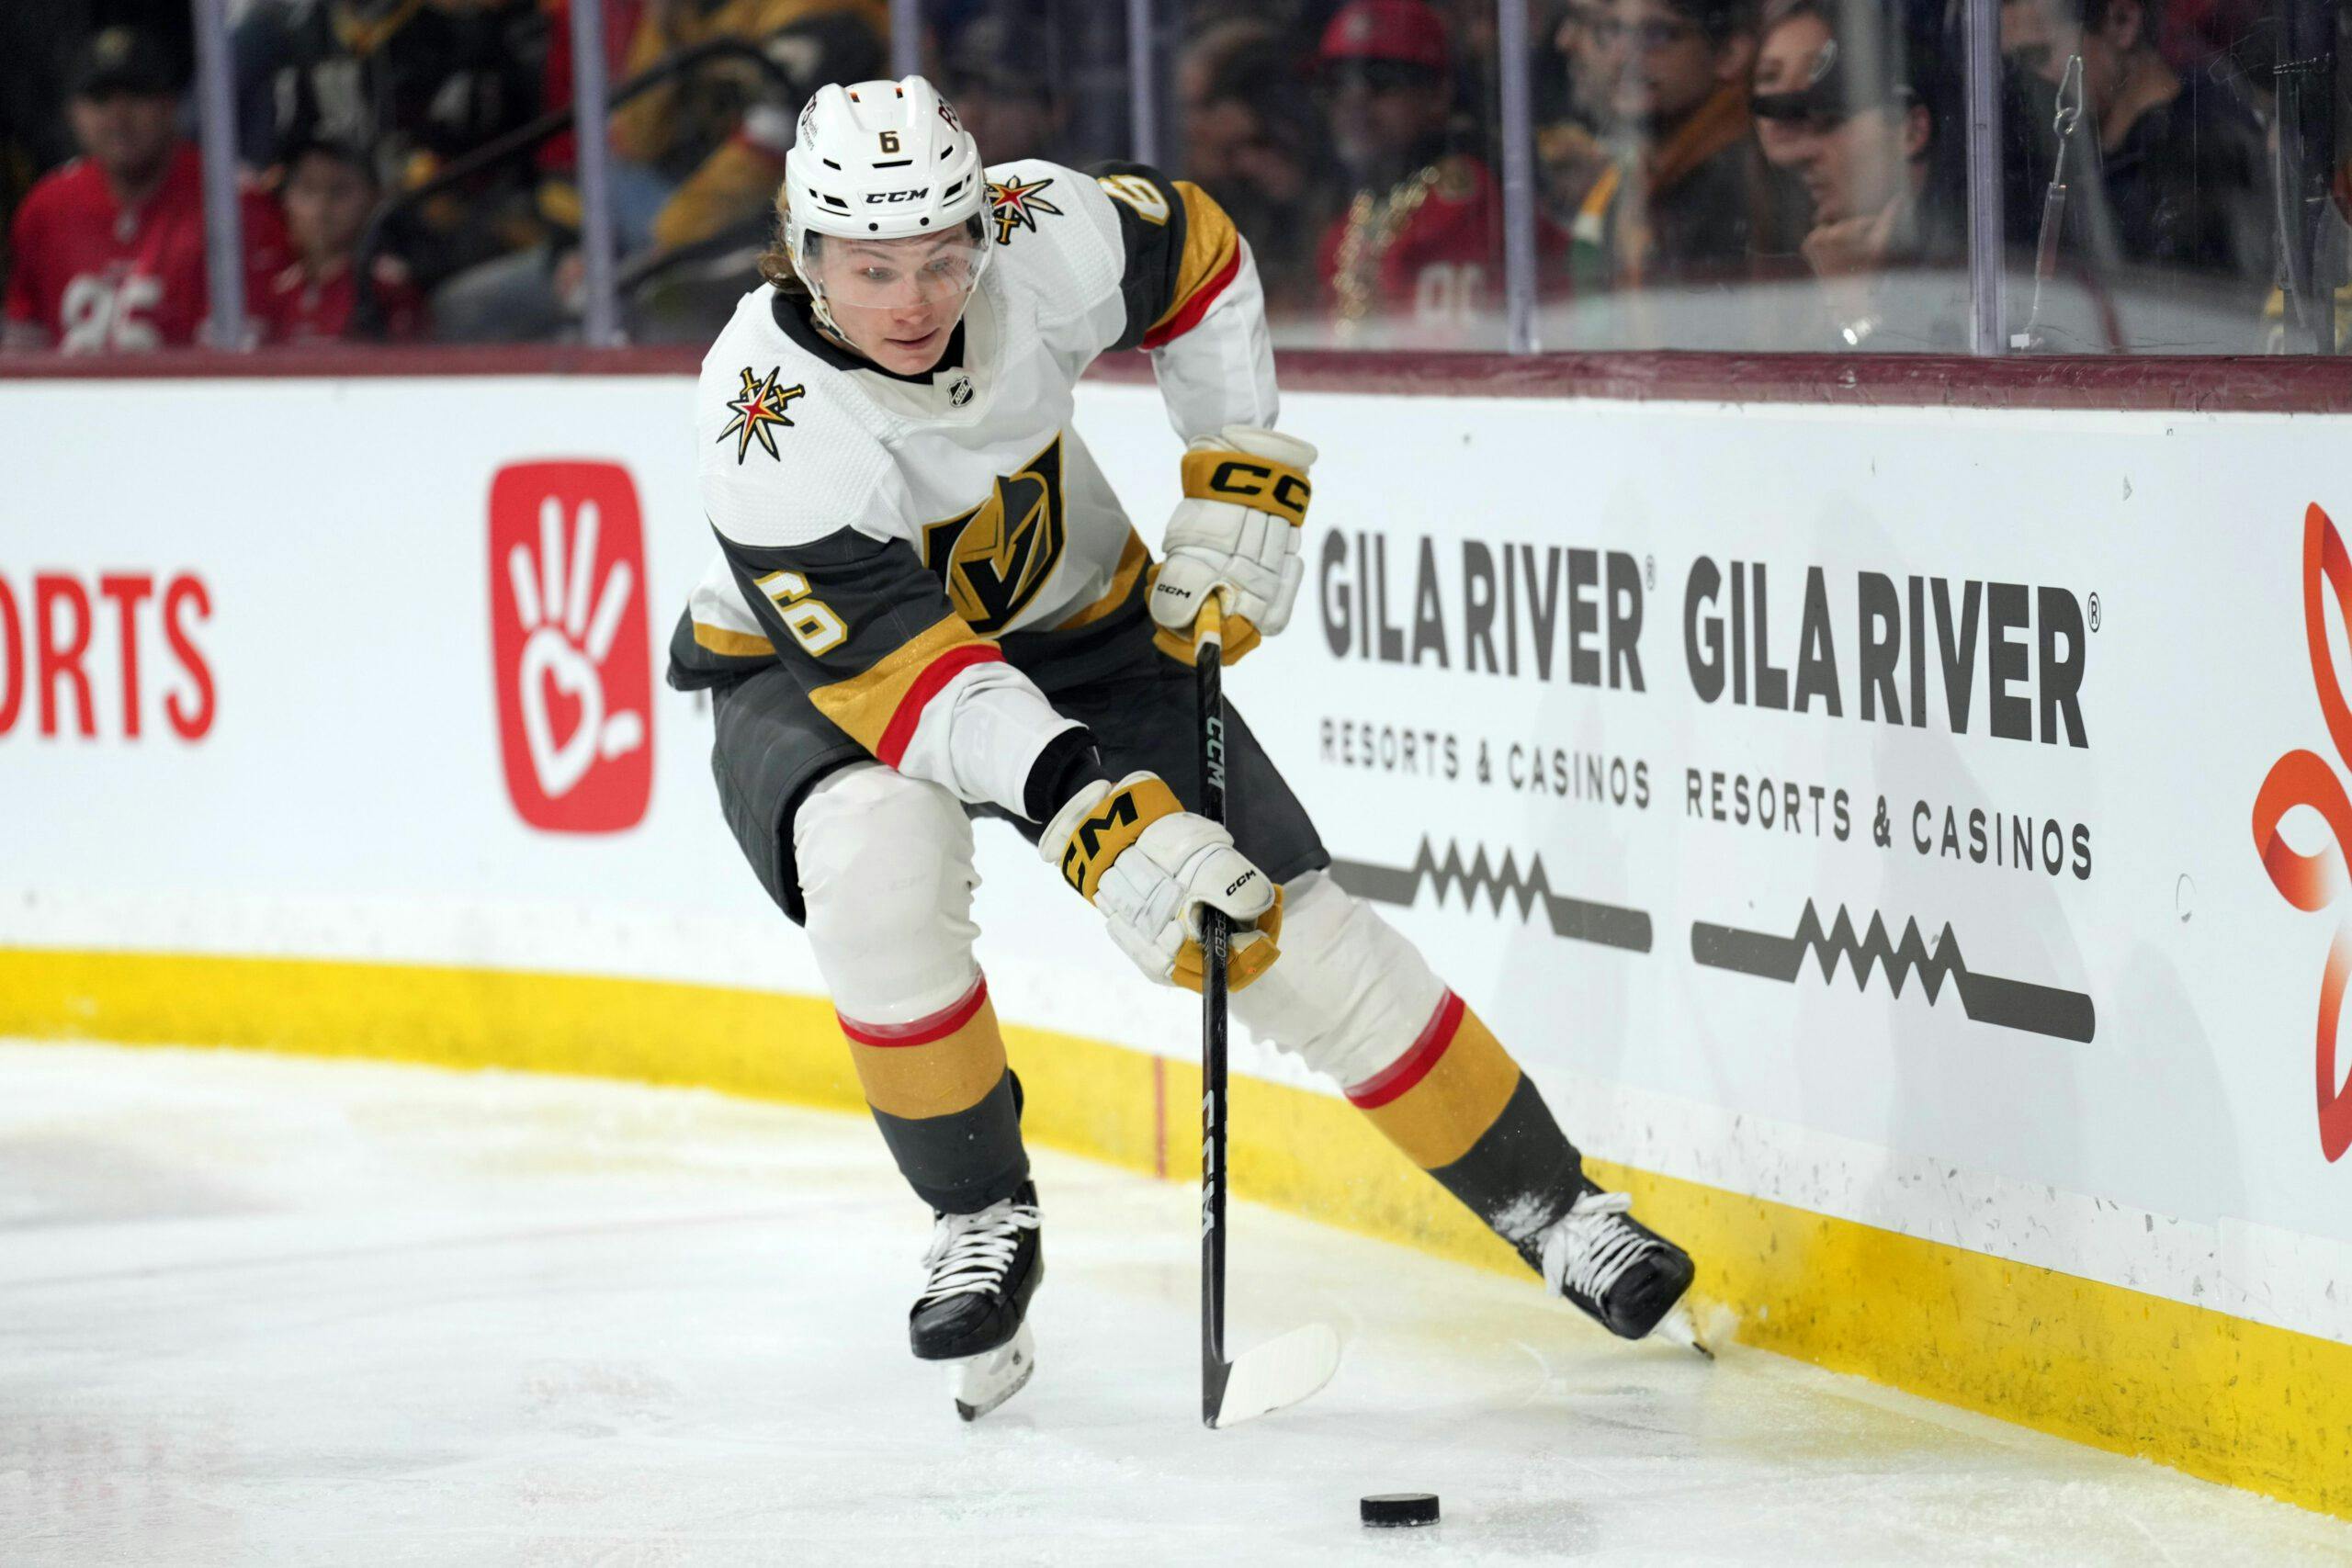 Jays' hockey-loving prospect picks Bruins to win Stanley Cup